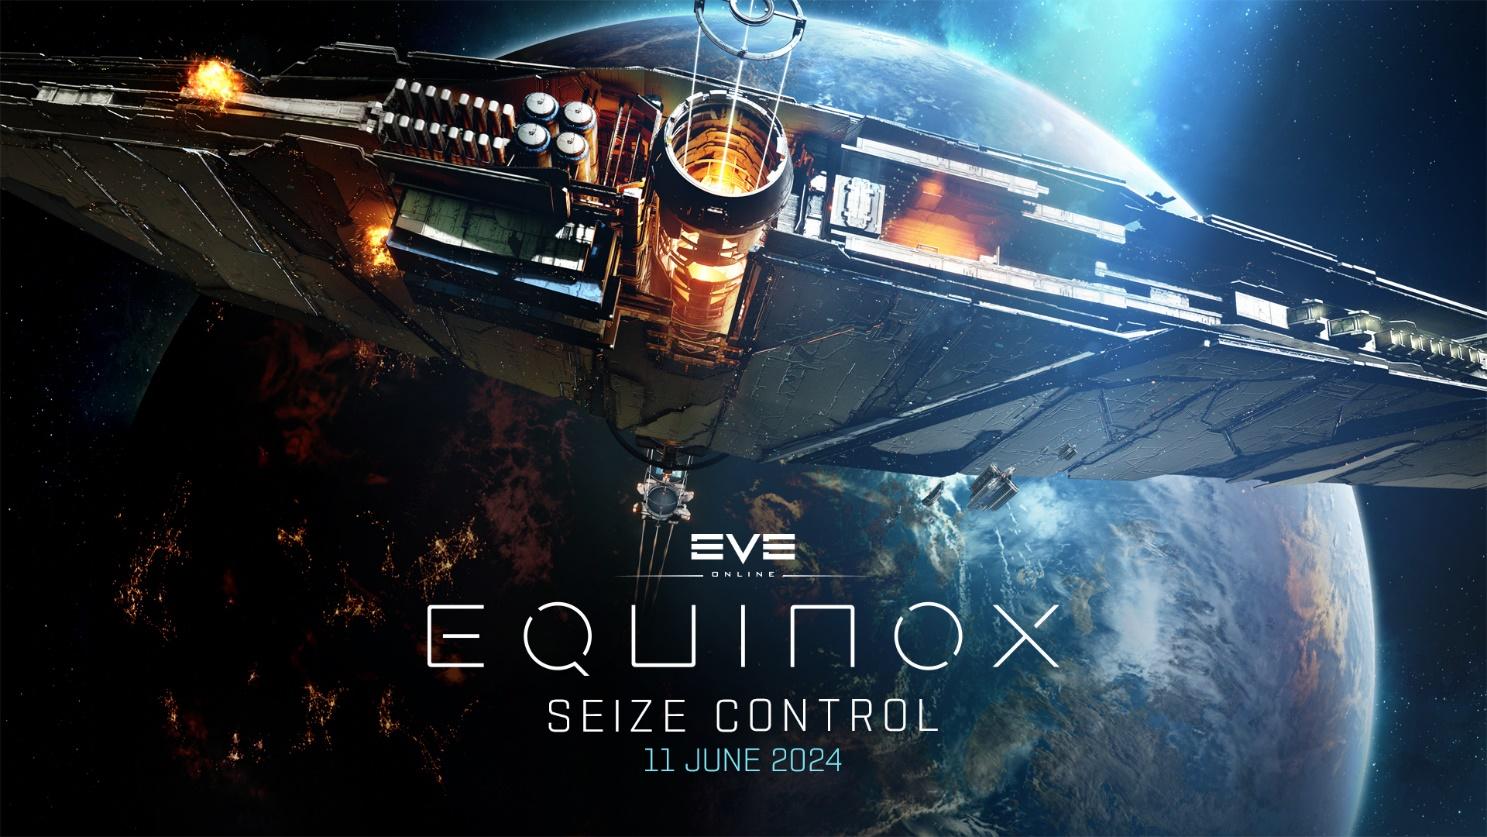 The splash art for EVE Online Equinox